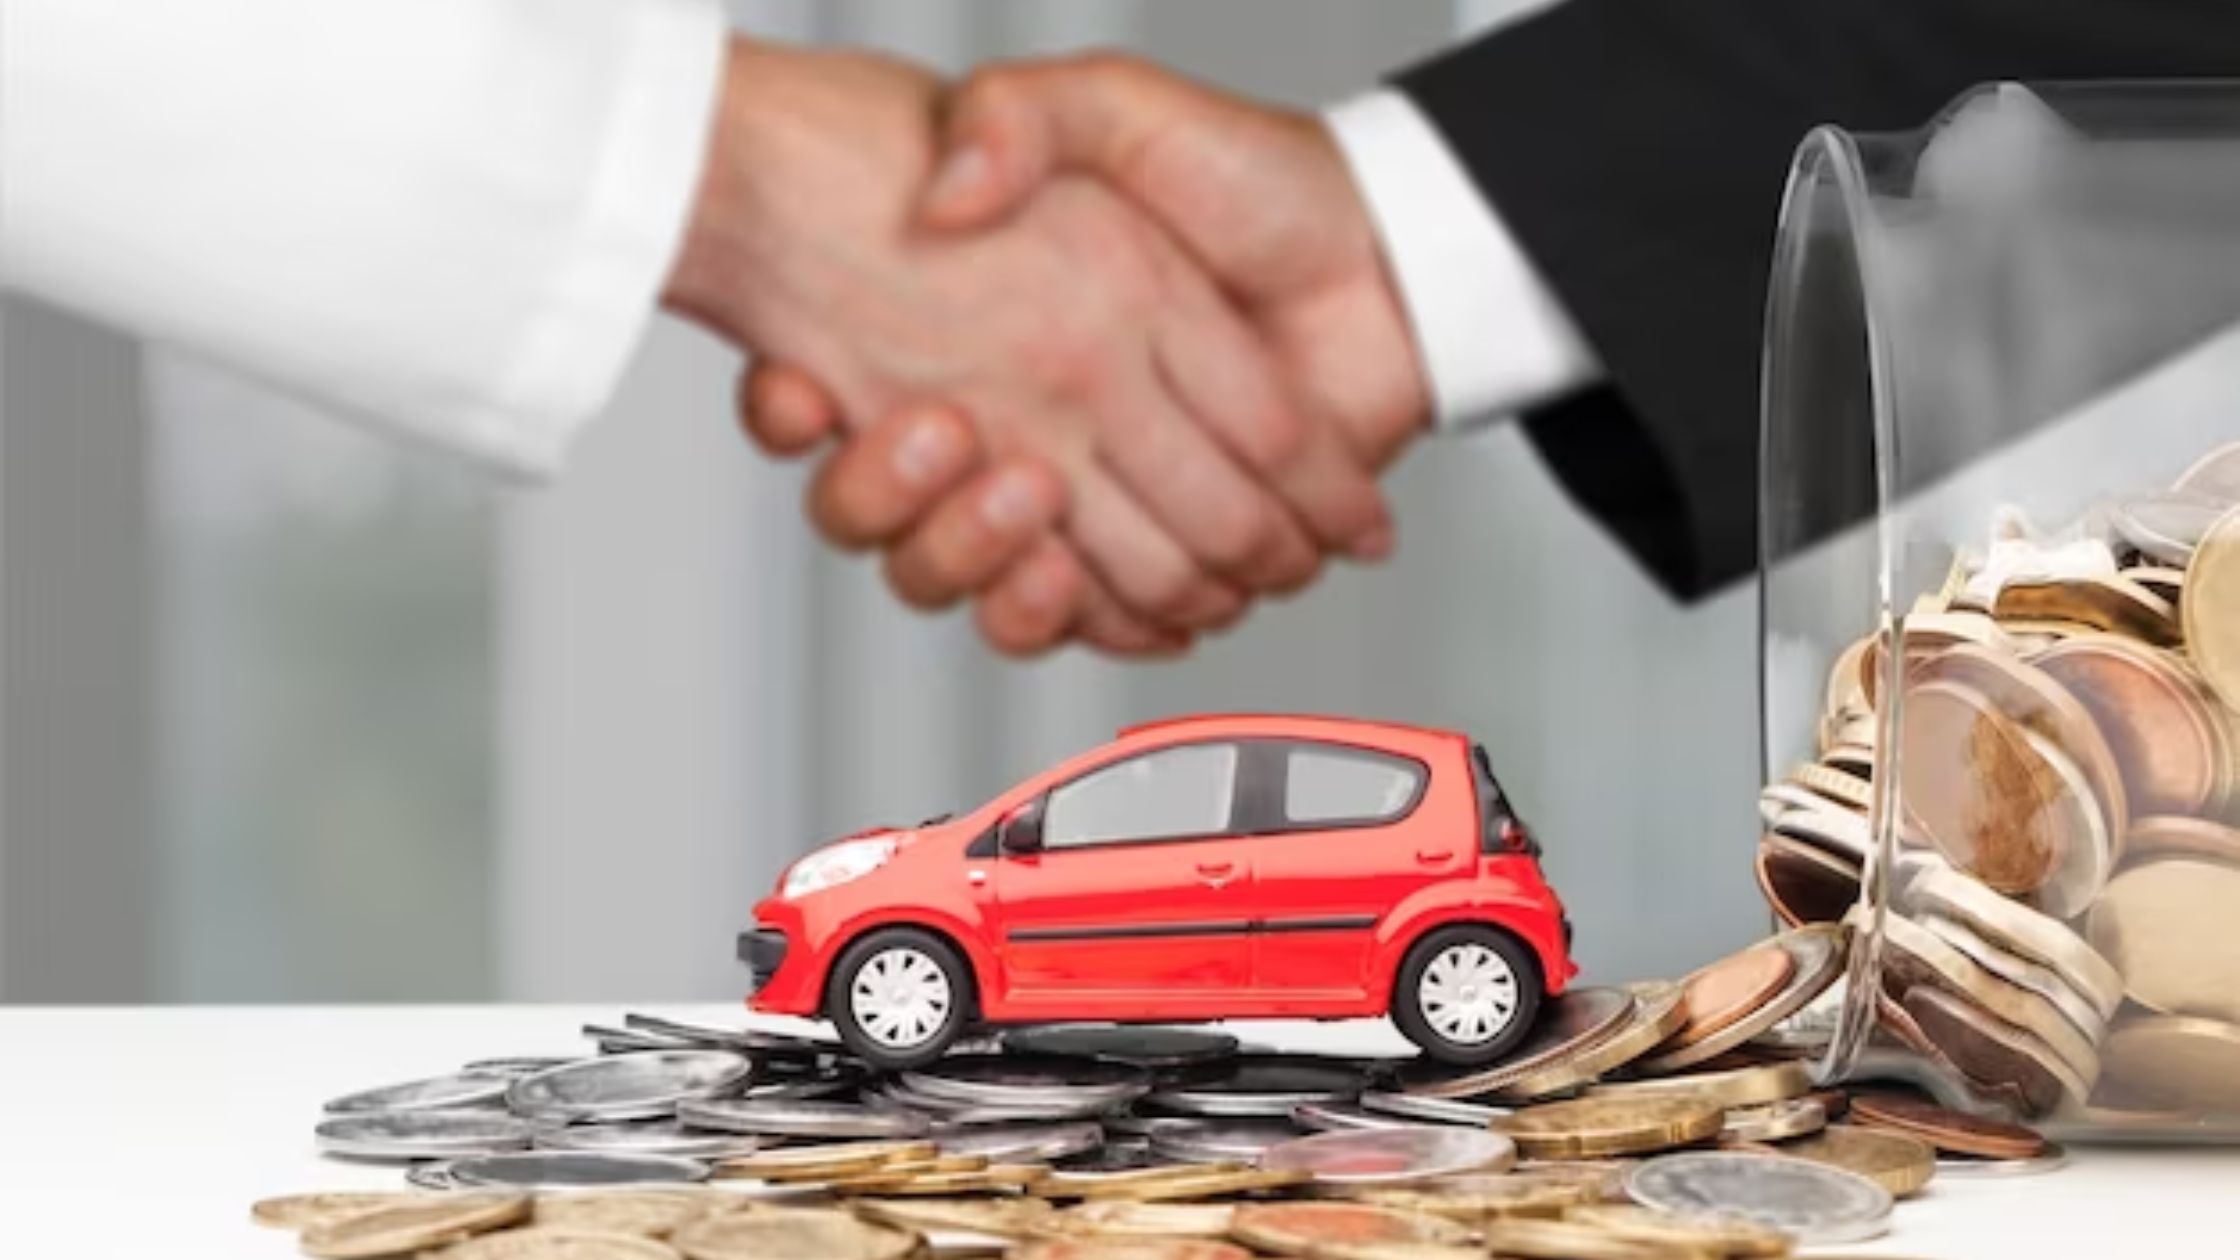 trustworthy car financing for business